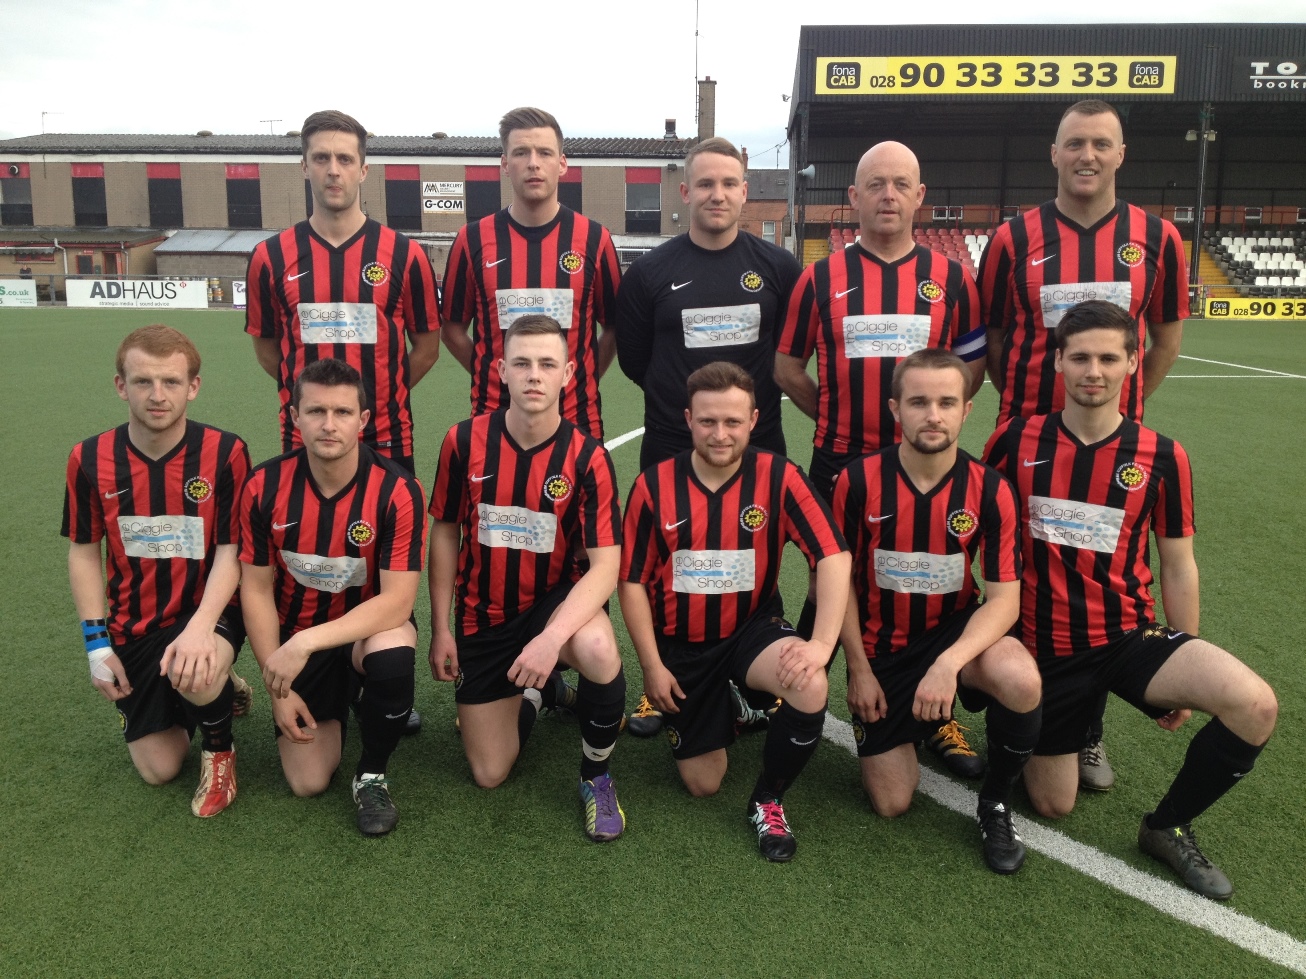 Winning Team Suffolk FC 11's 